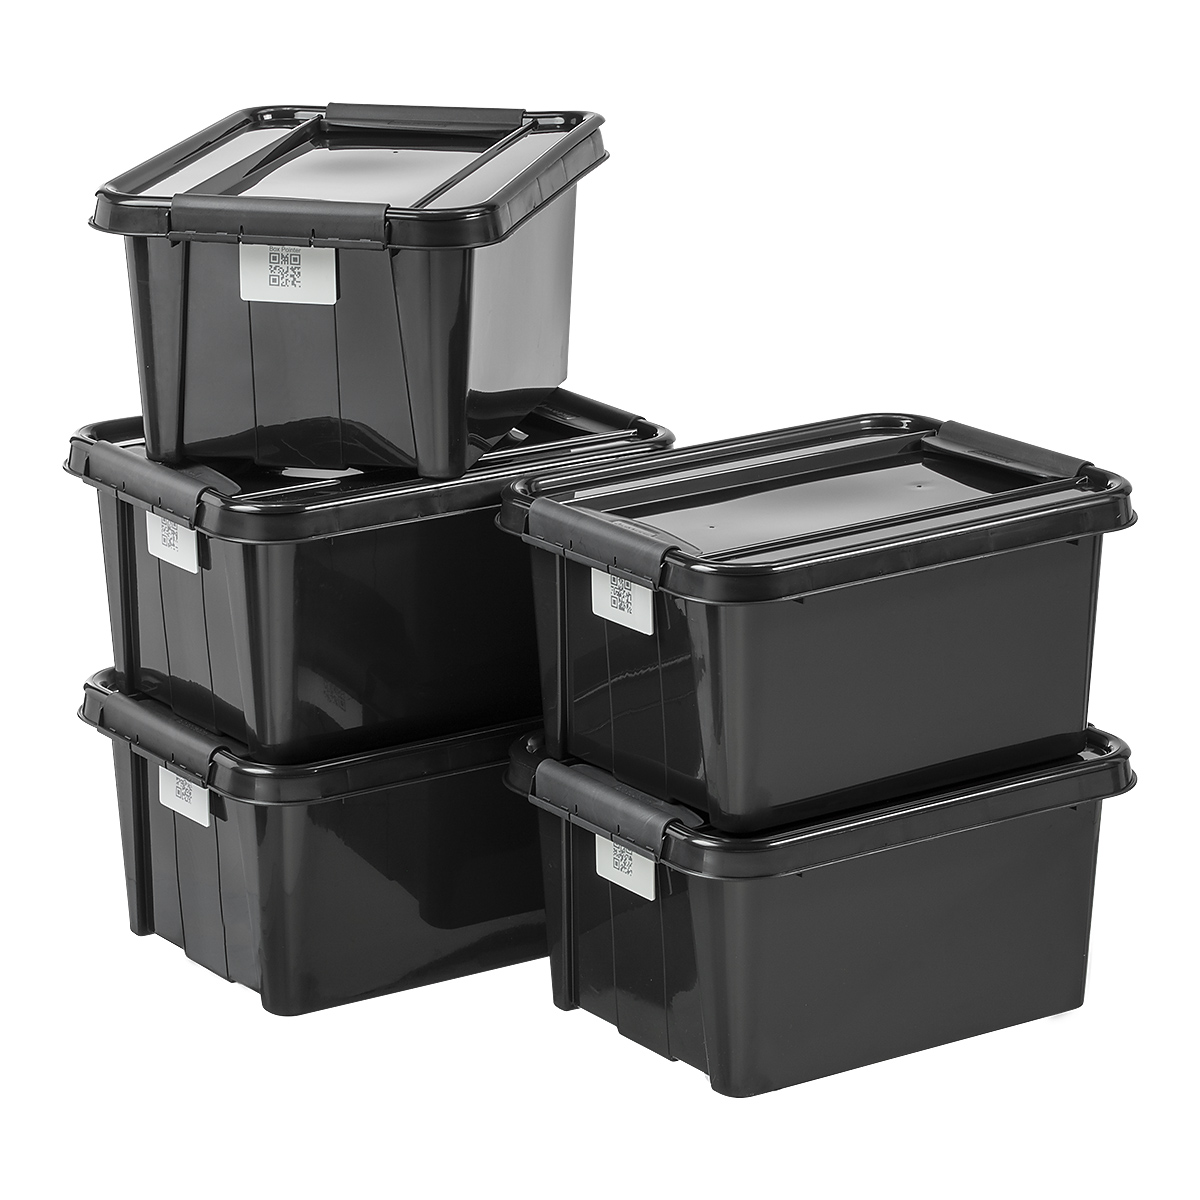 of Recycle - Team Set L 32 5 Probox Plast